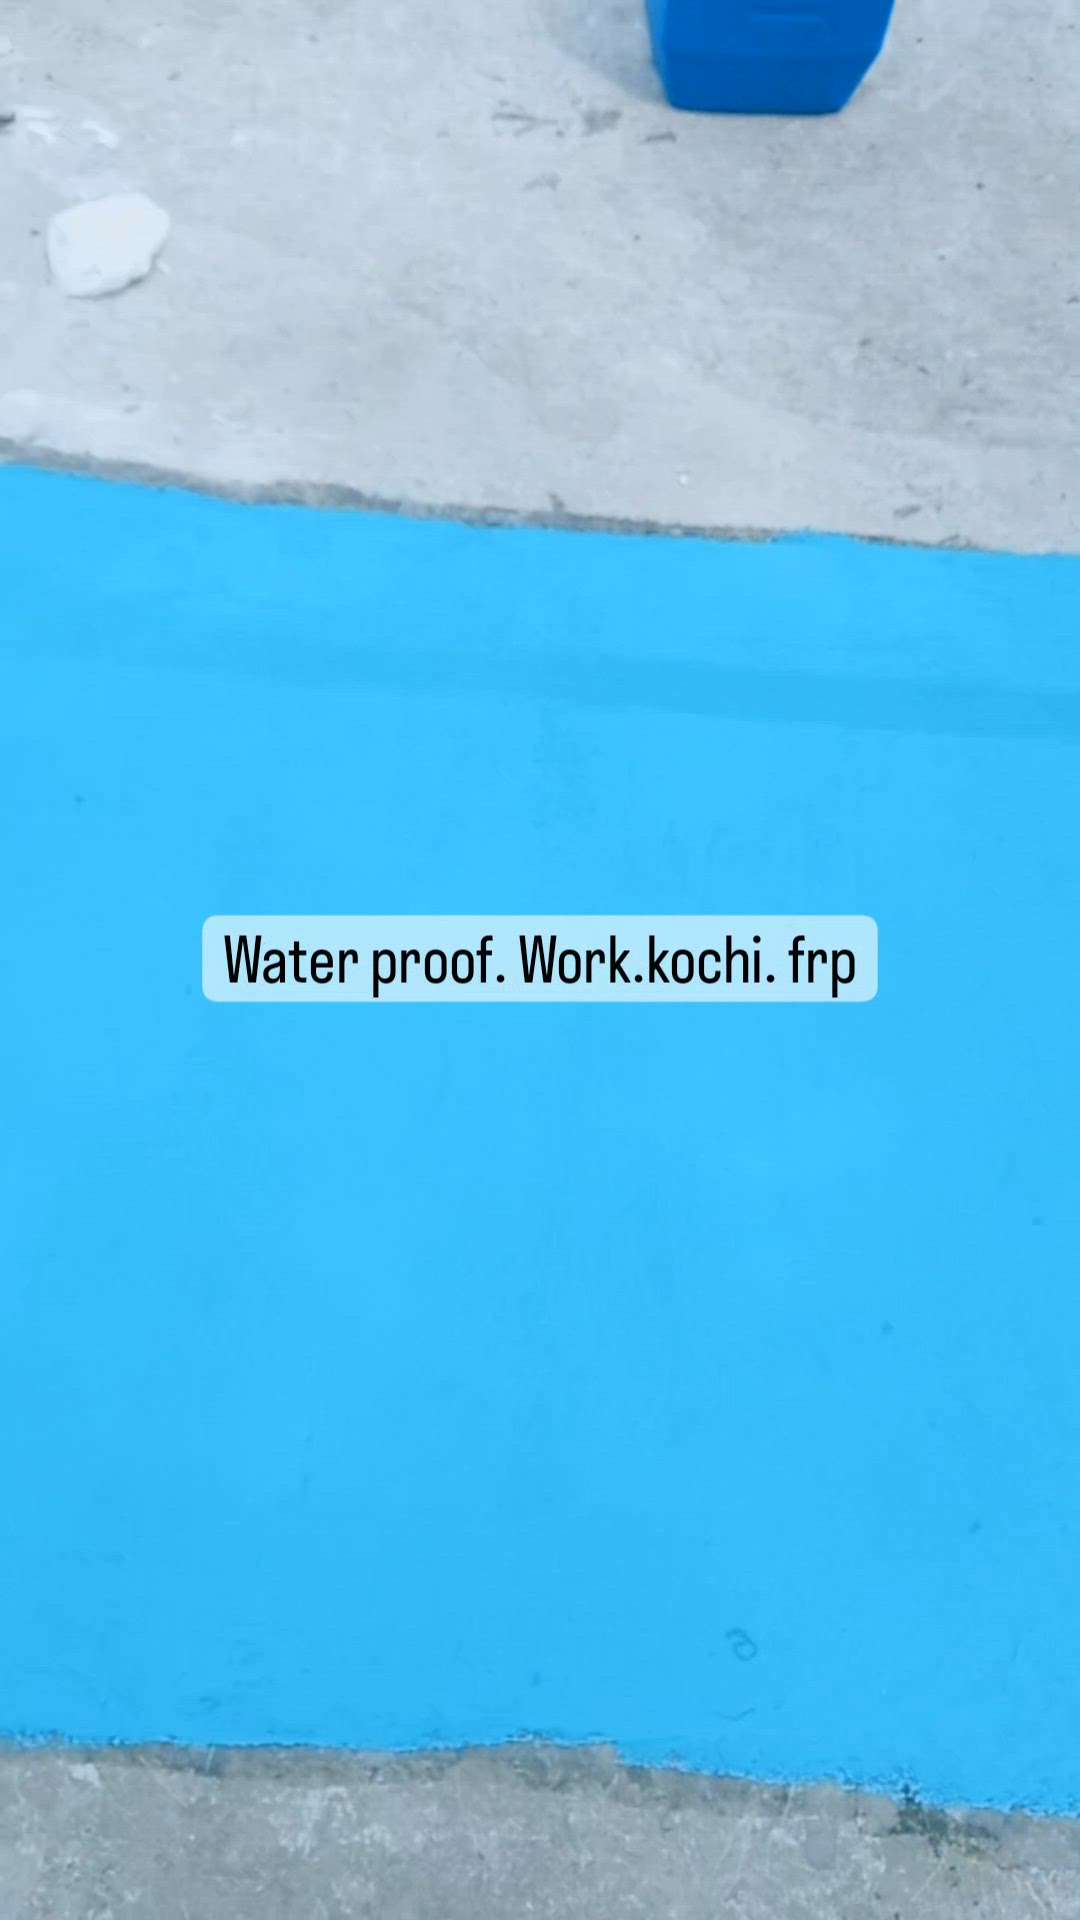 frp water proof. Work.kochi